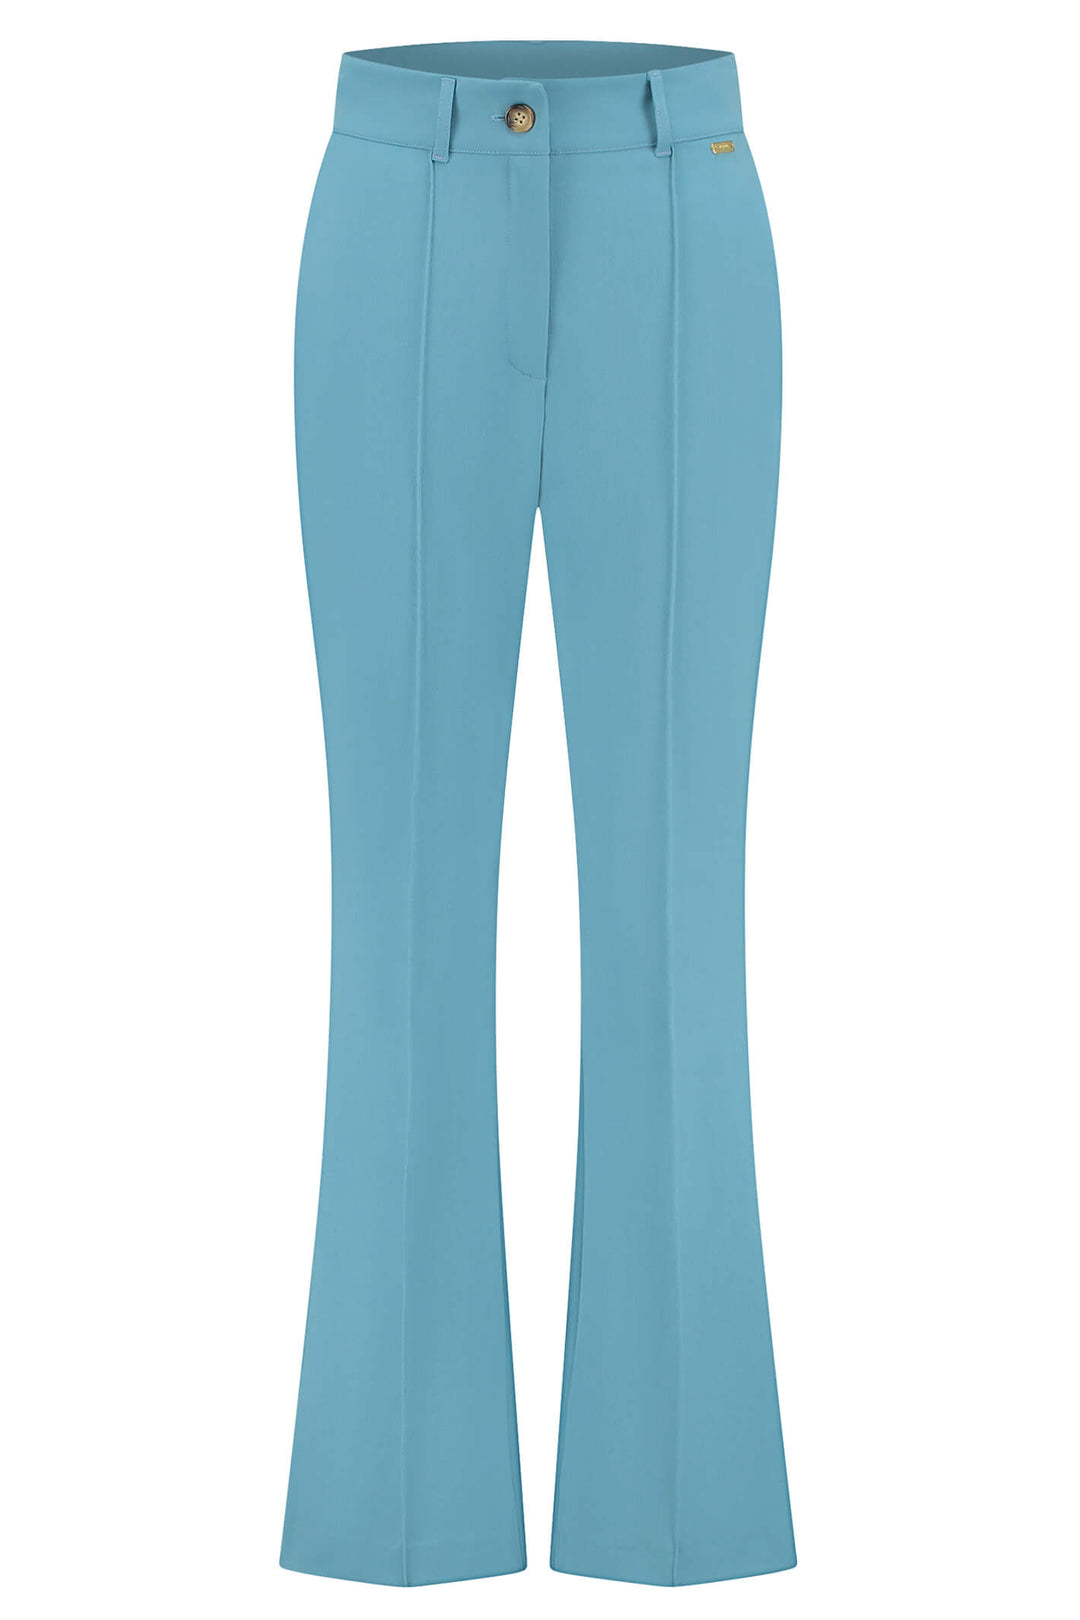 Pom Amsterdam SP6956 Blue Stoned Trousers - Olivia Grace Fashion